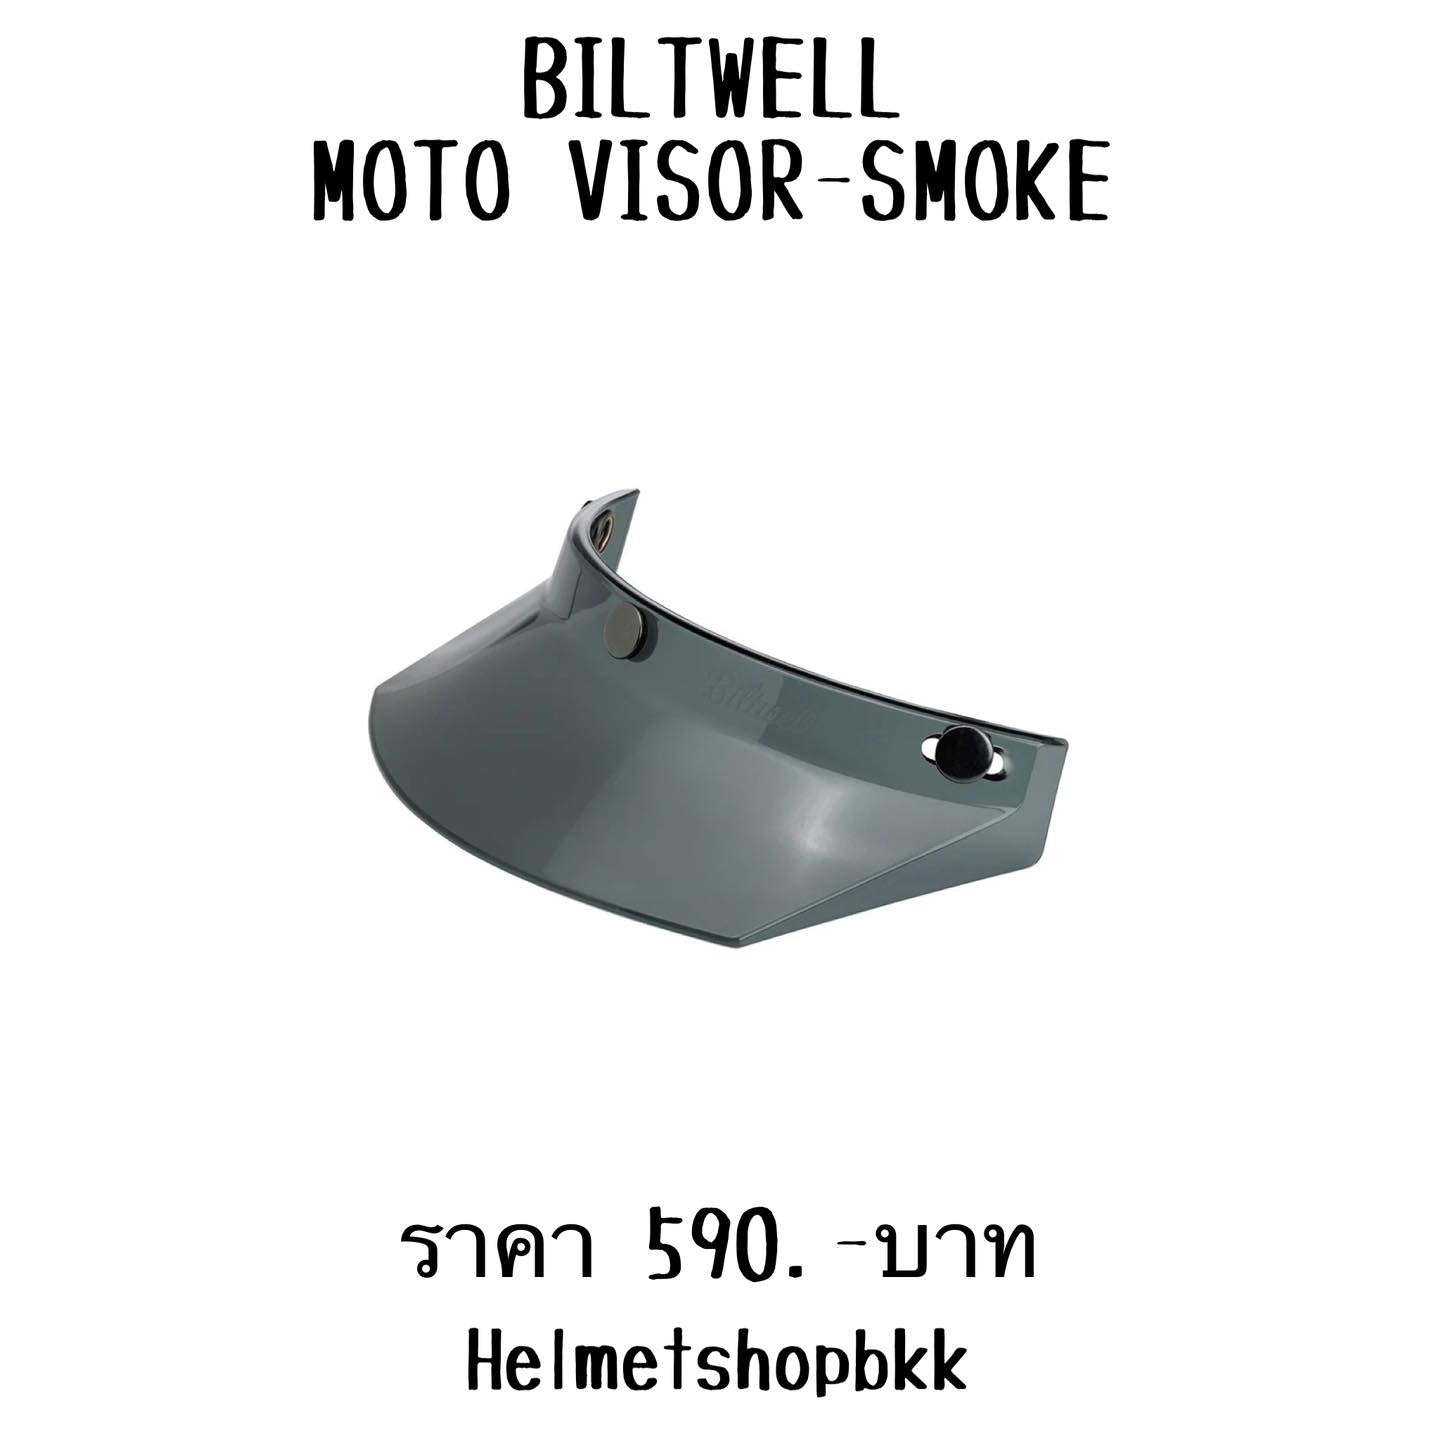 BILTWELL MOTO VISOR SMOKE TRANSLUCENT